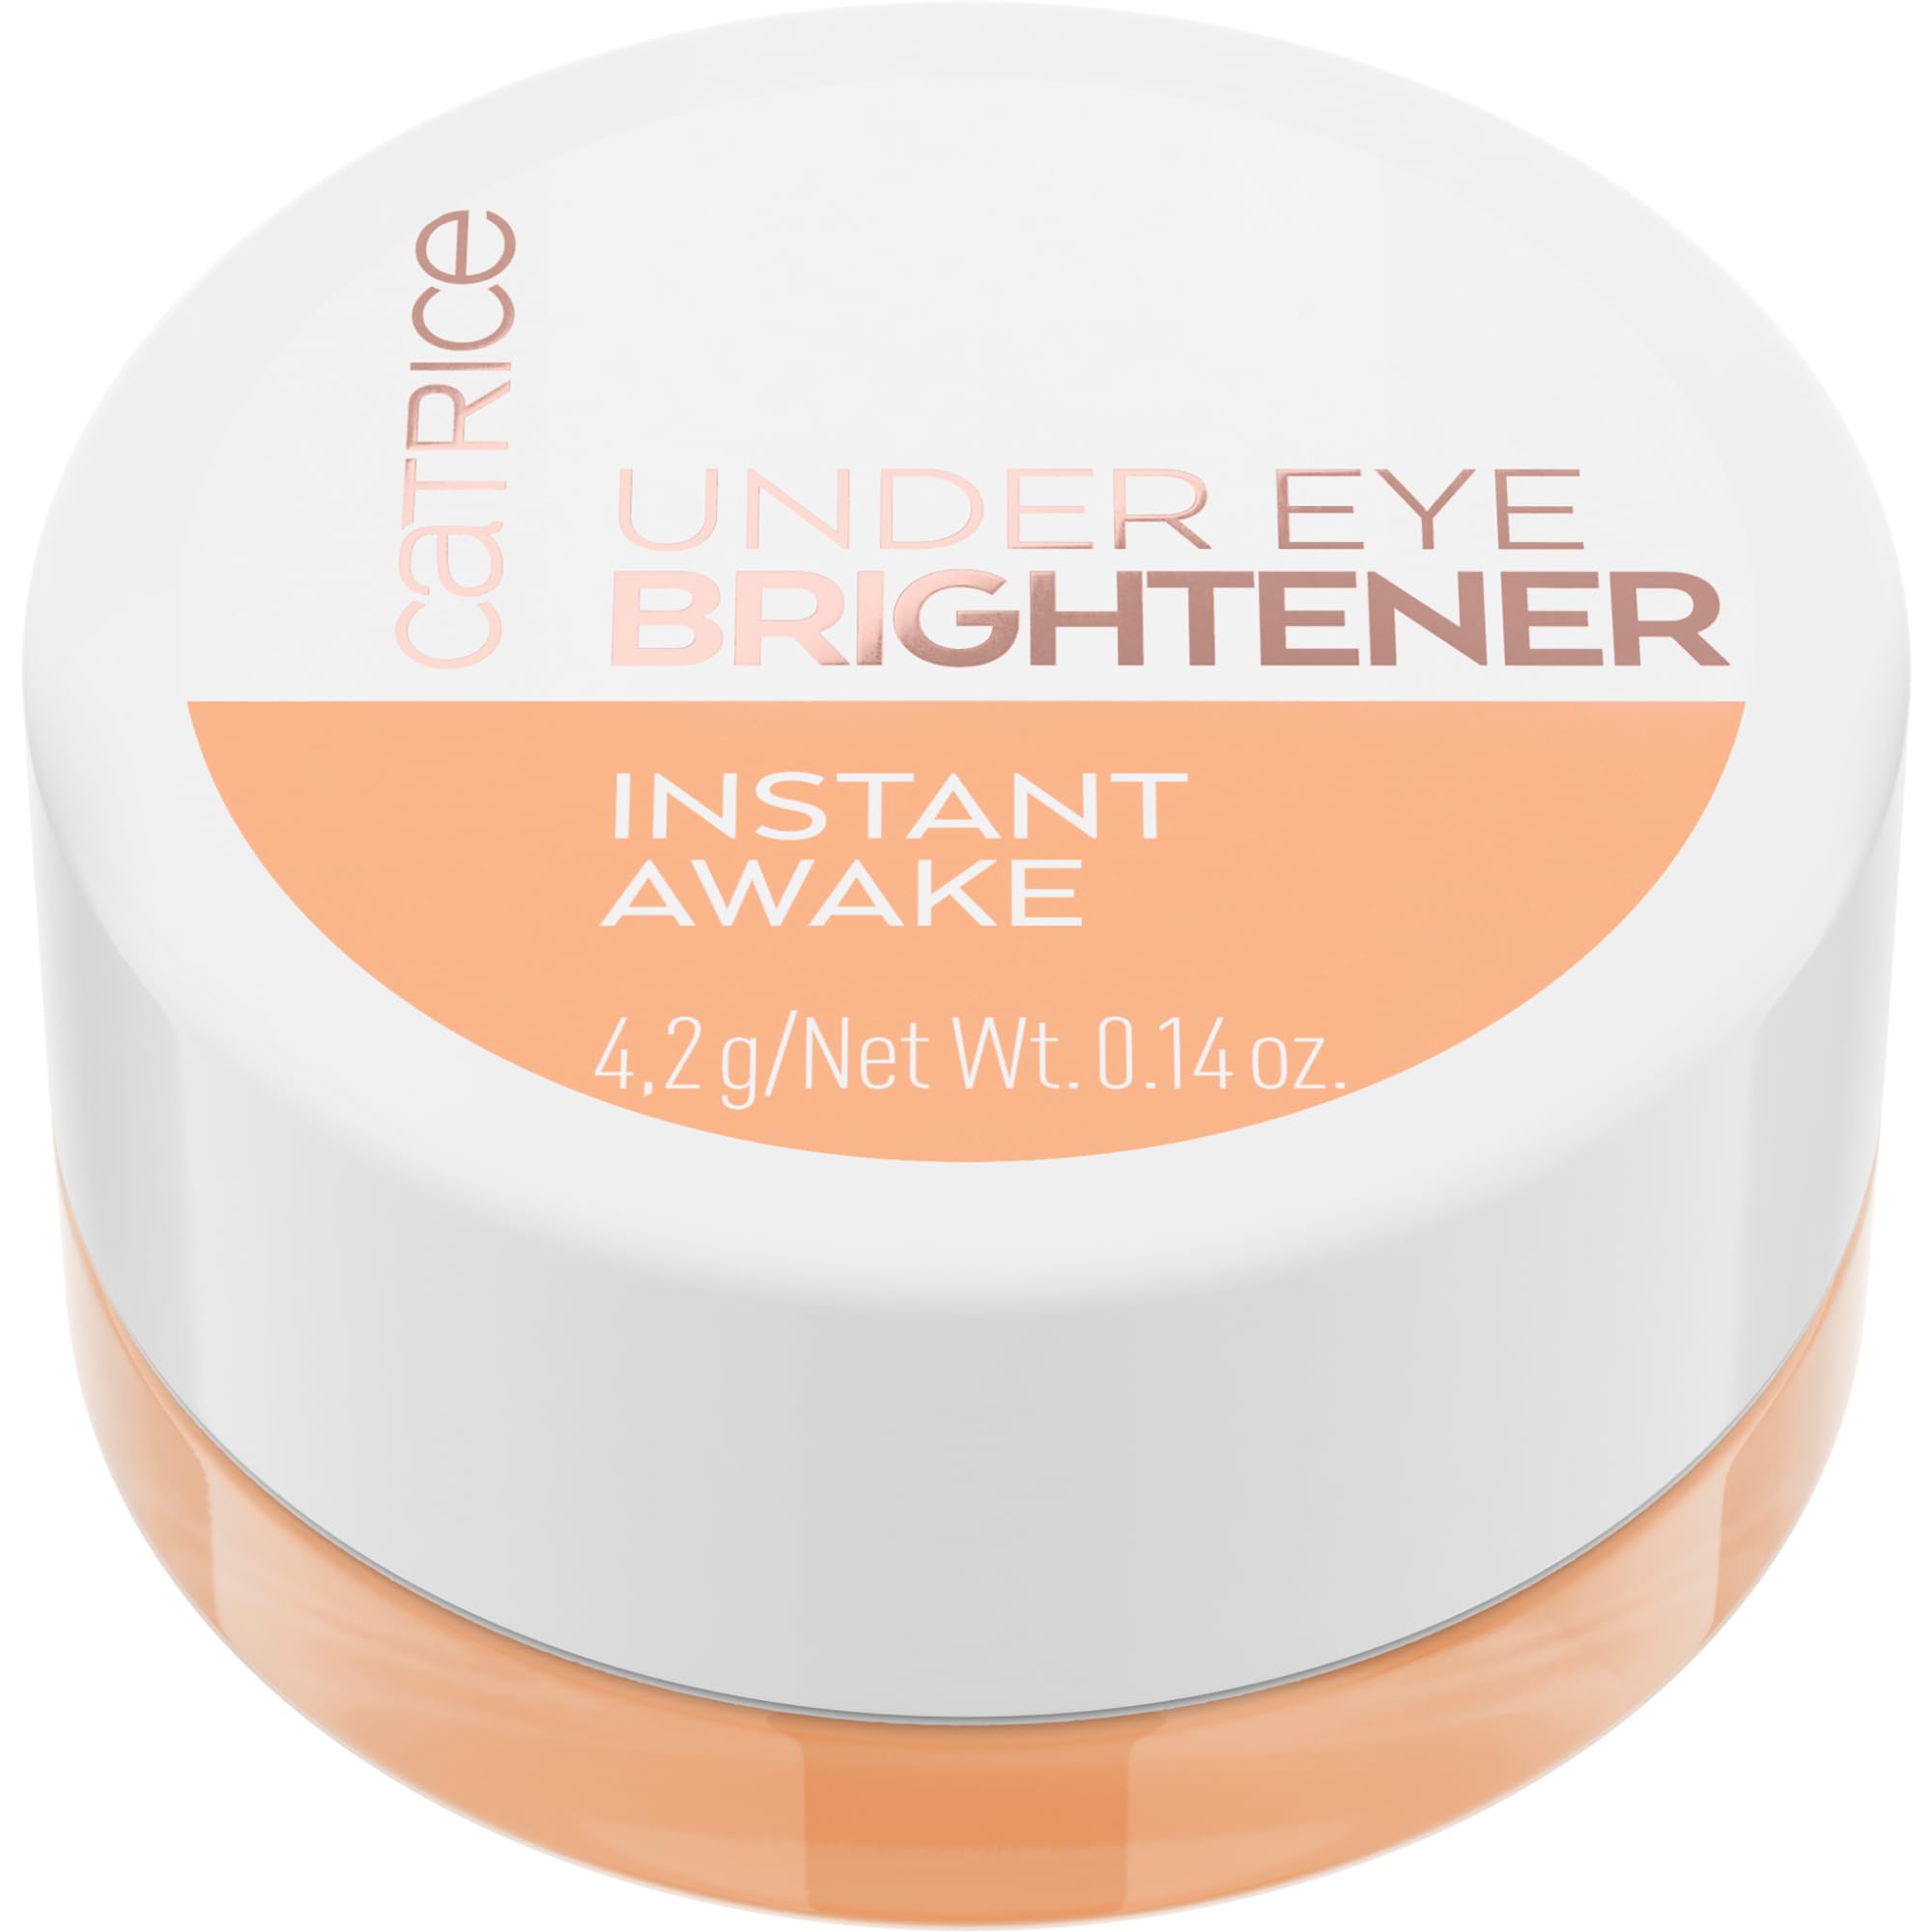 Catrice | Under Eye Brightener | Conceal & Brighten Dark Circles | With Hyaluronic Acid & Shea Butter | Vegan, Cruelty Free & Paraben Free (020 | Warm Nude)